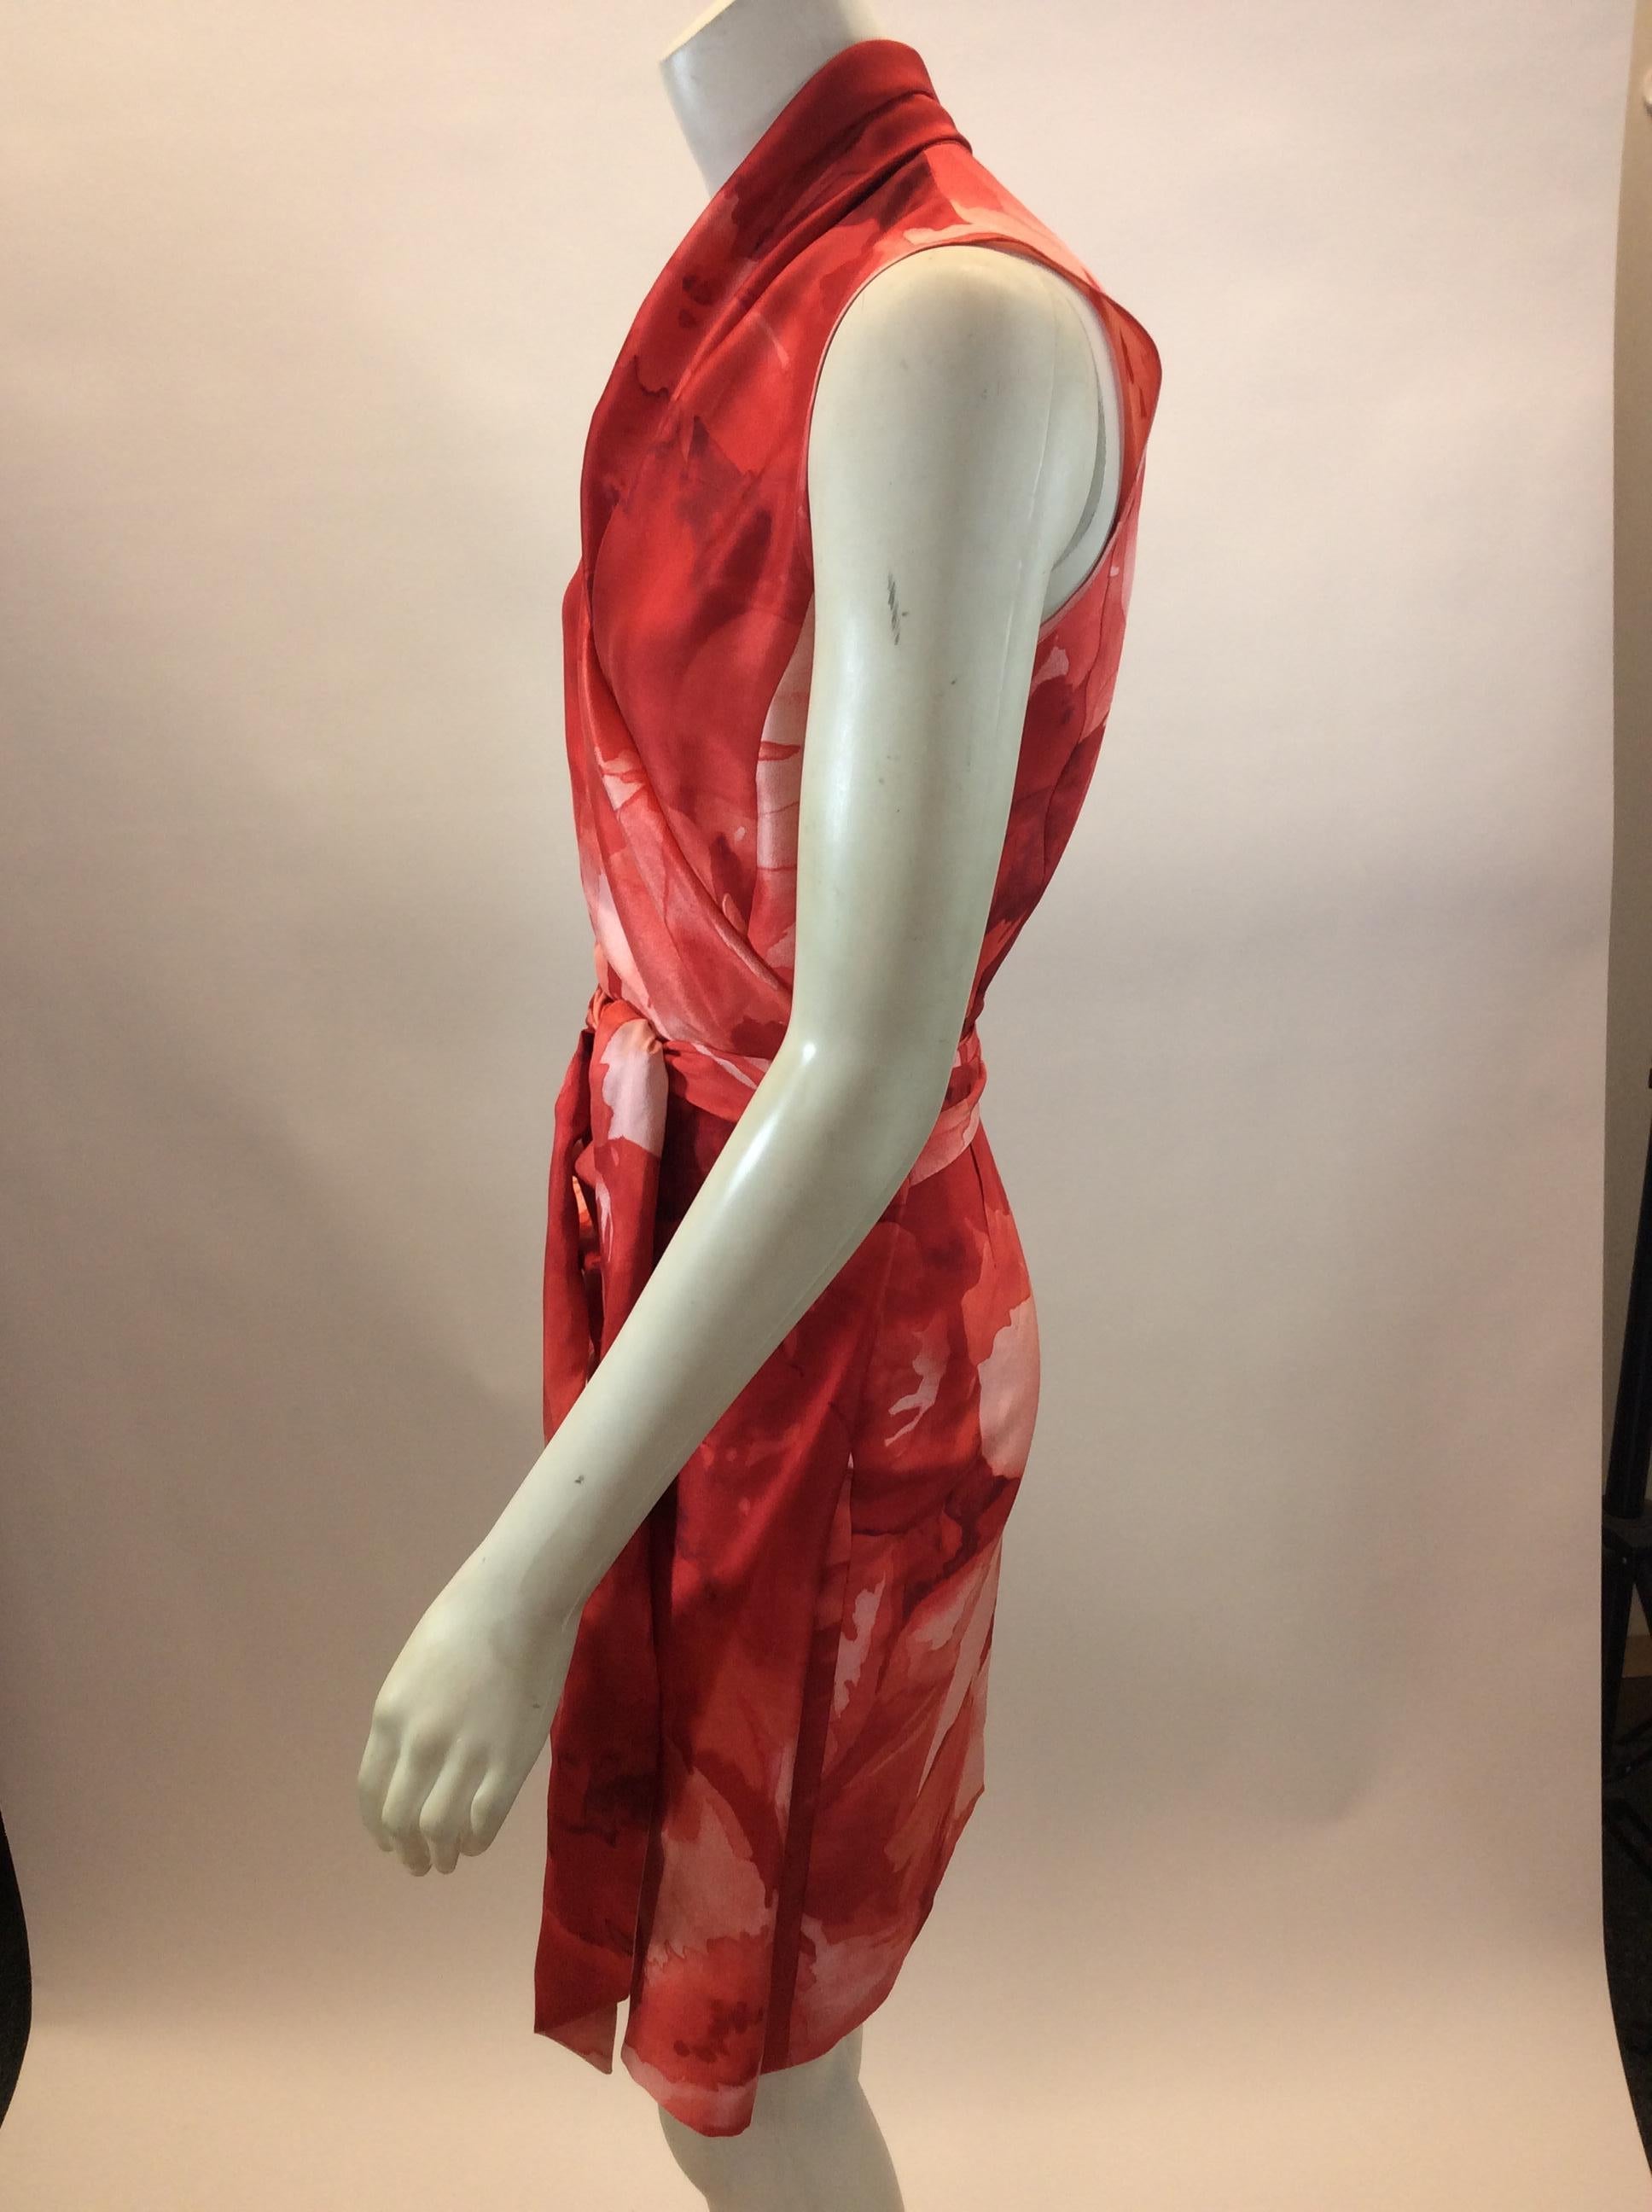 Max Mara Red Print Silk Wrap Dress
$178
Made in Italy
100% Silk
Size 4
Length 34.5